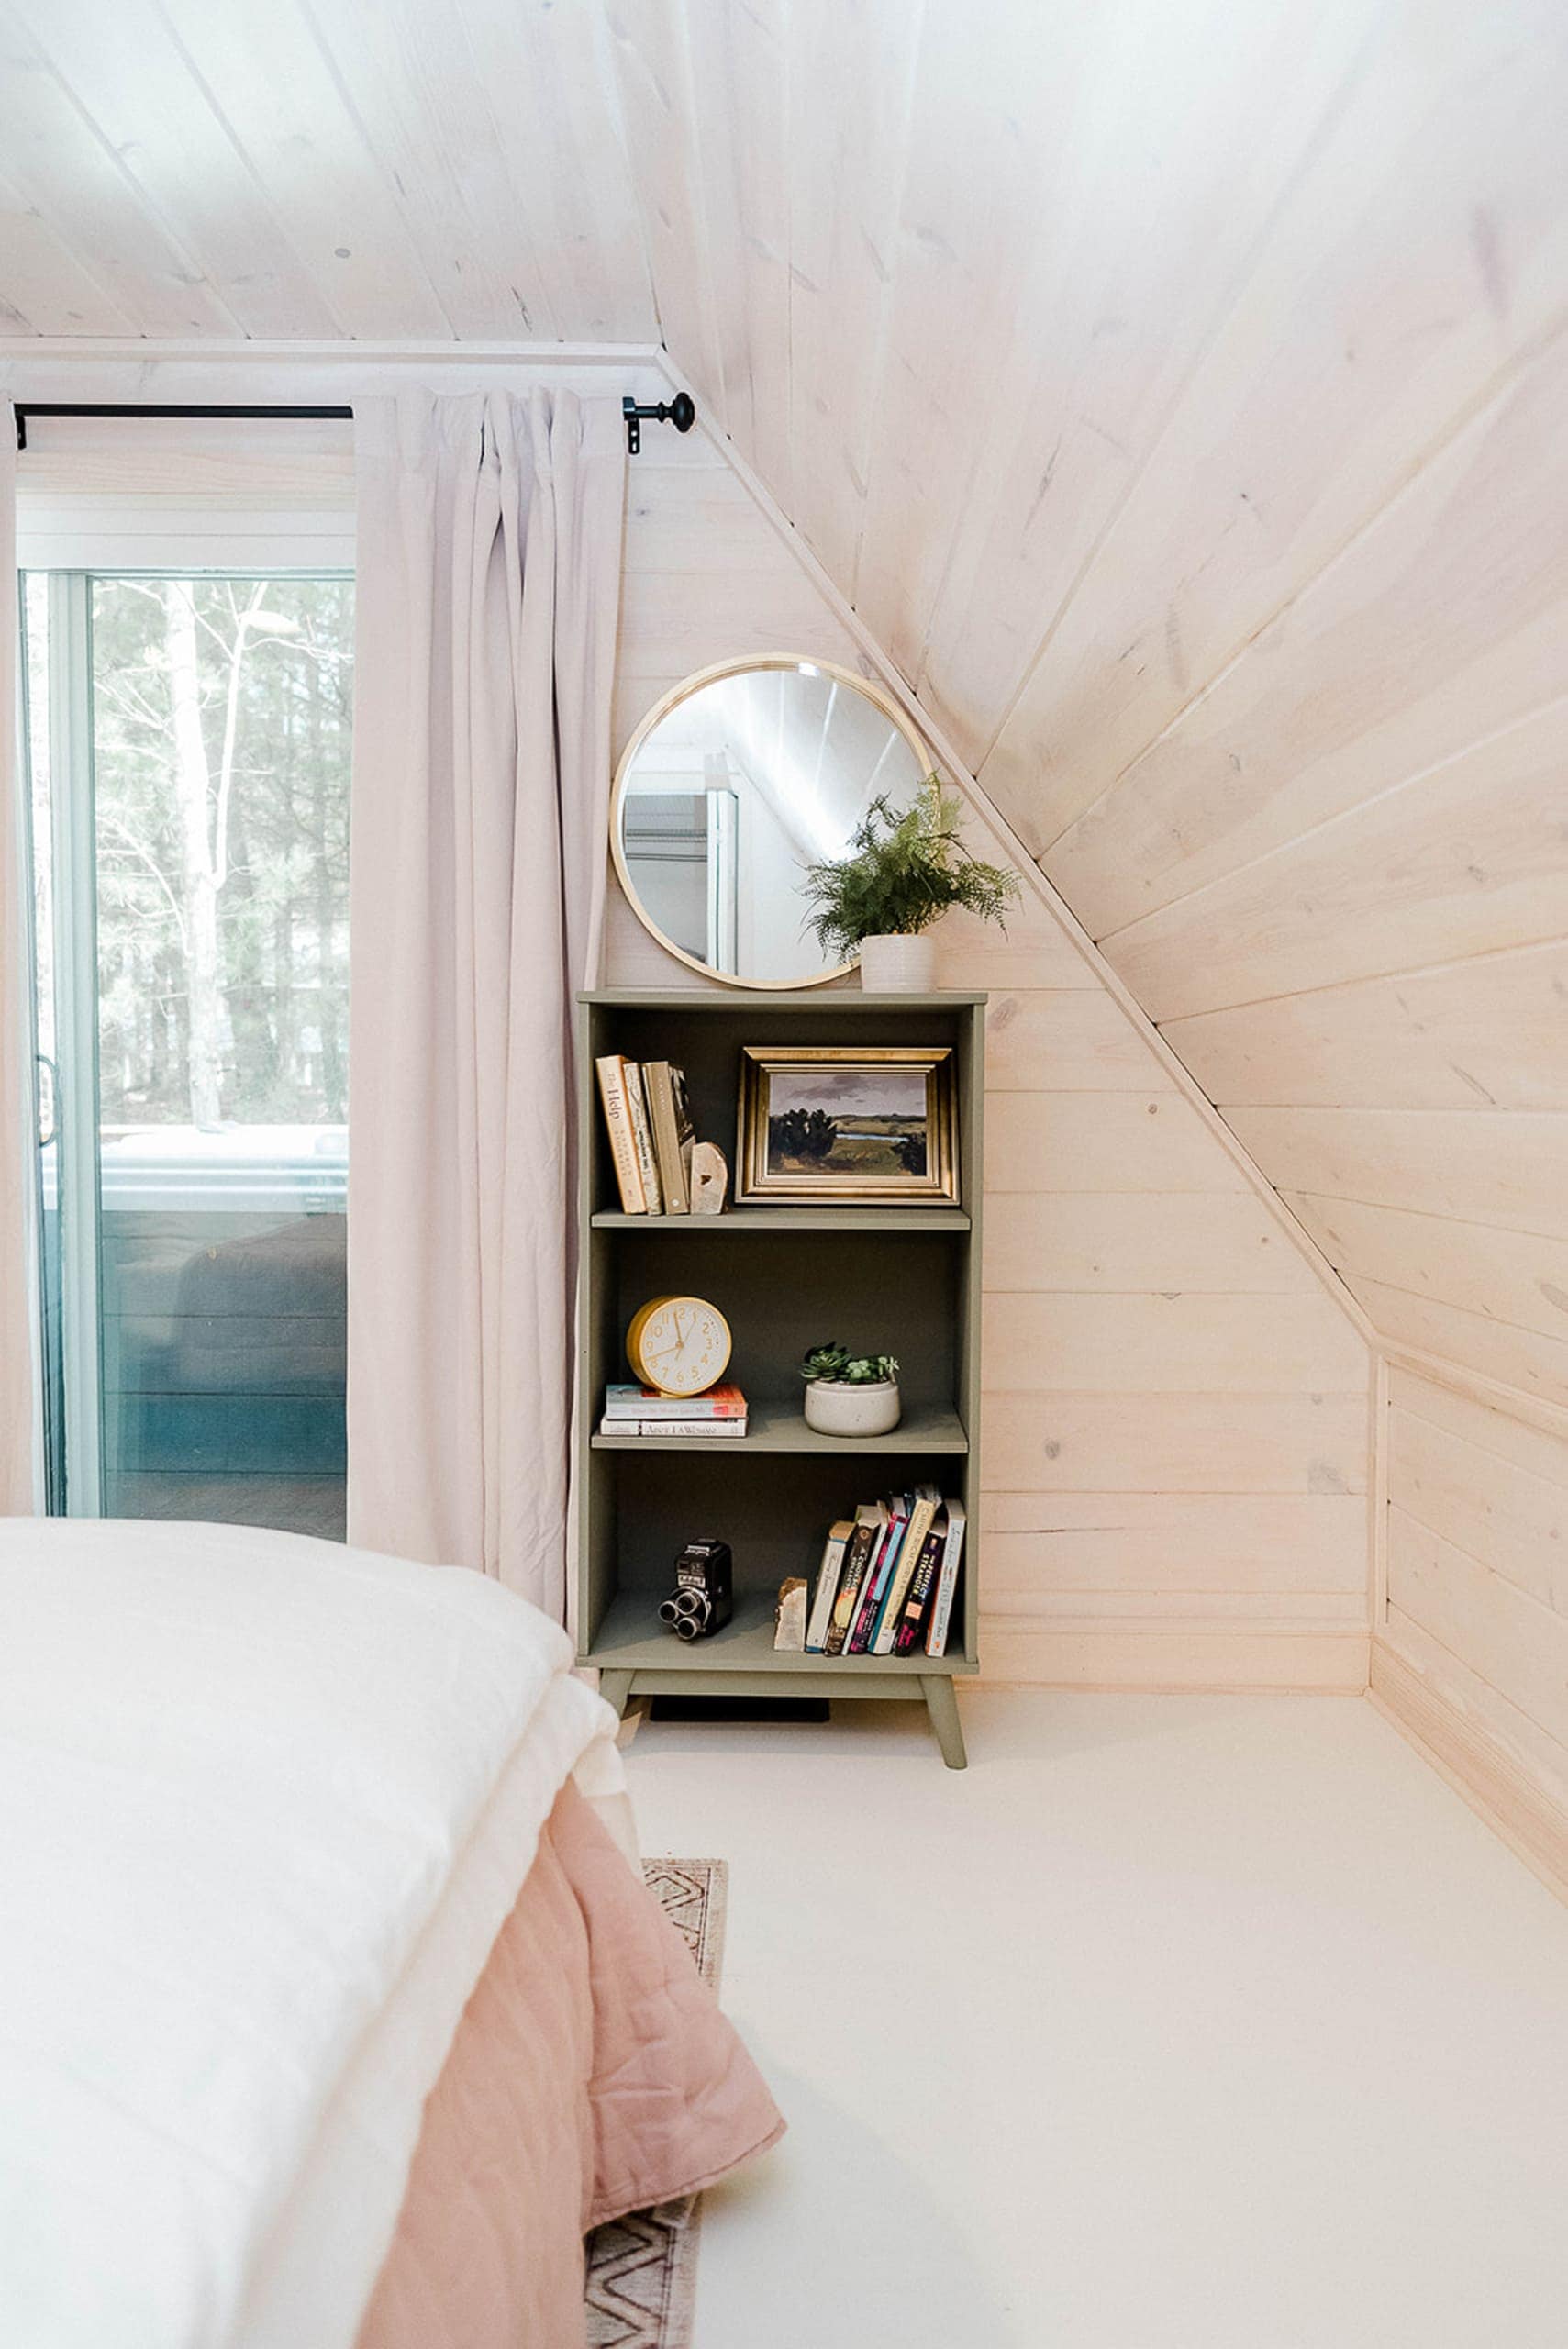 Cute little bookshelf in an airbnb